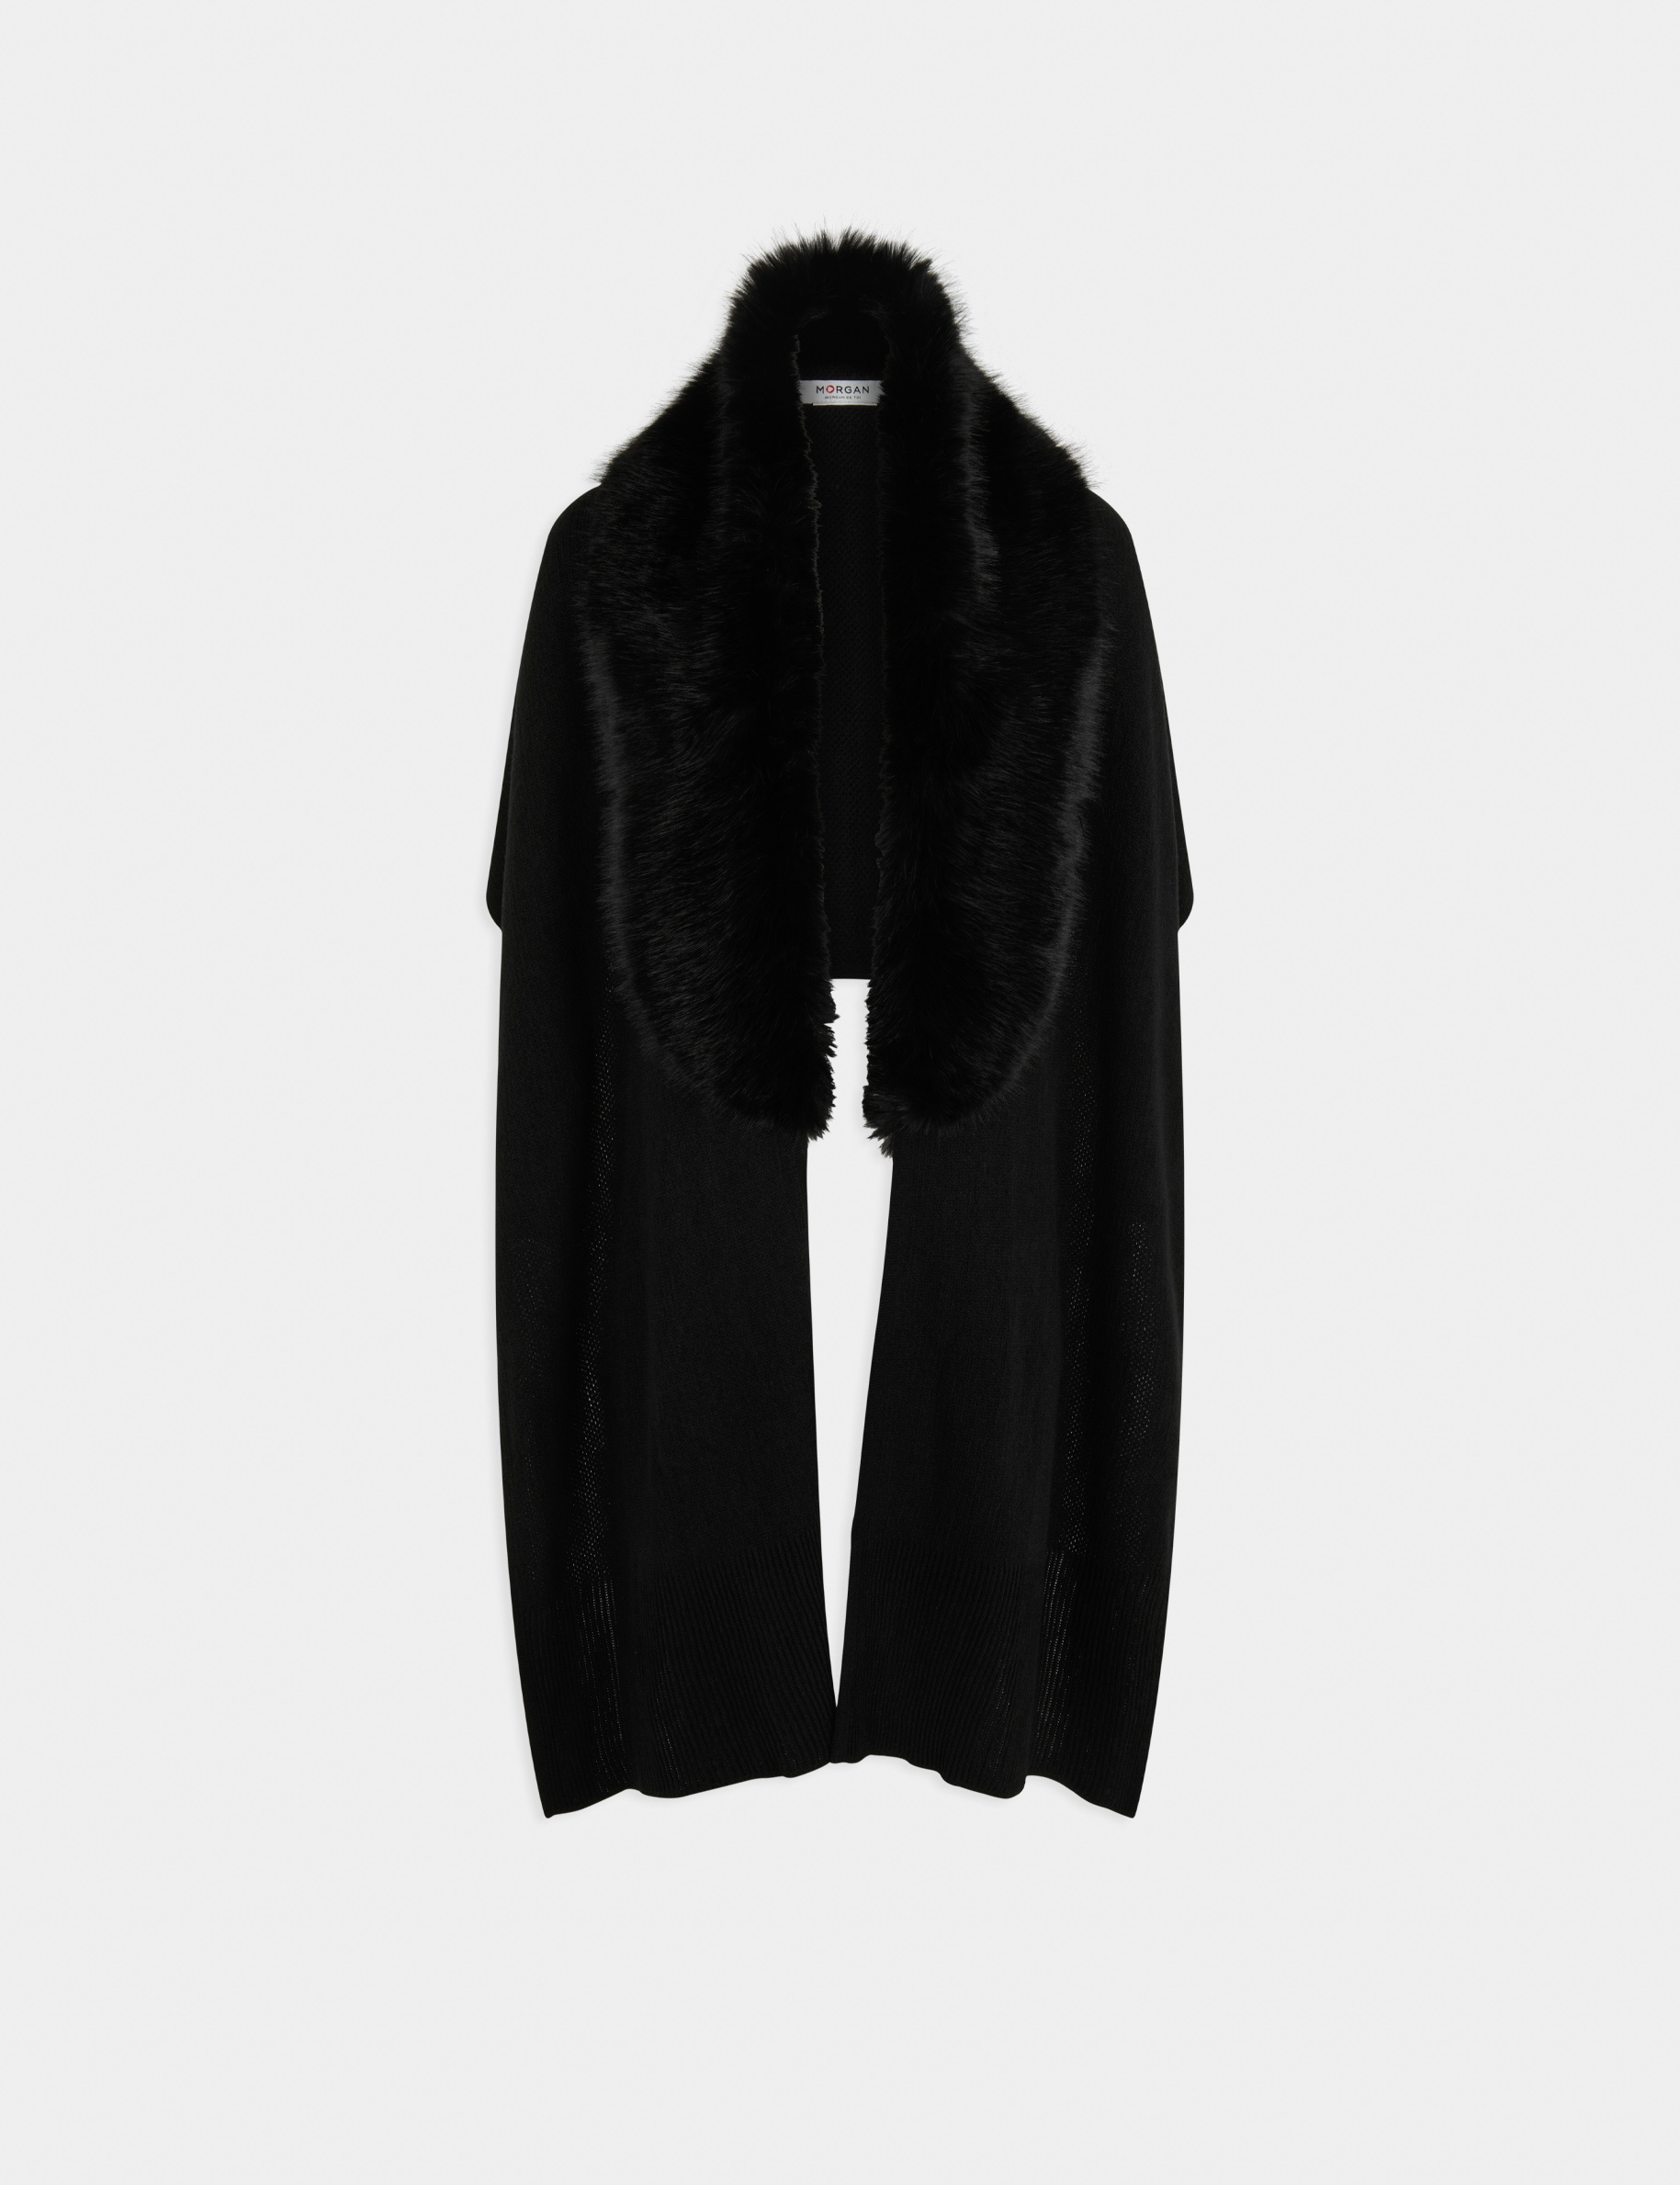 Poncho with faux fur details black ladies' | Morgan